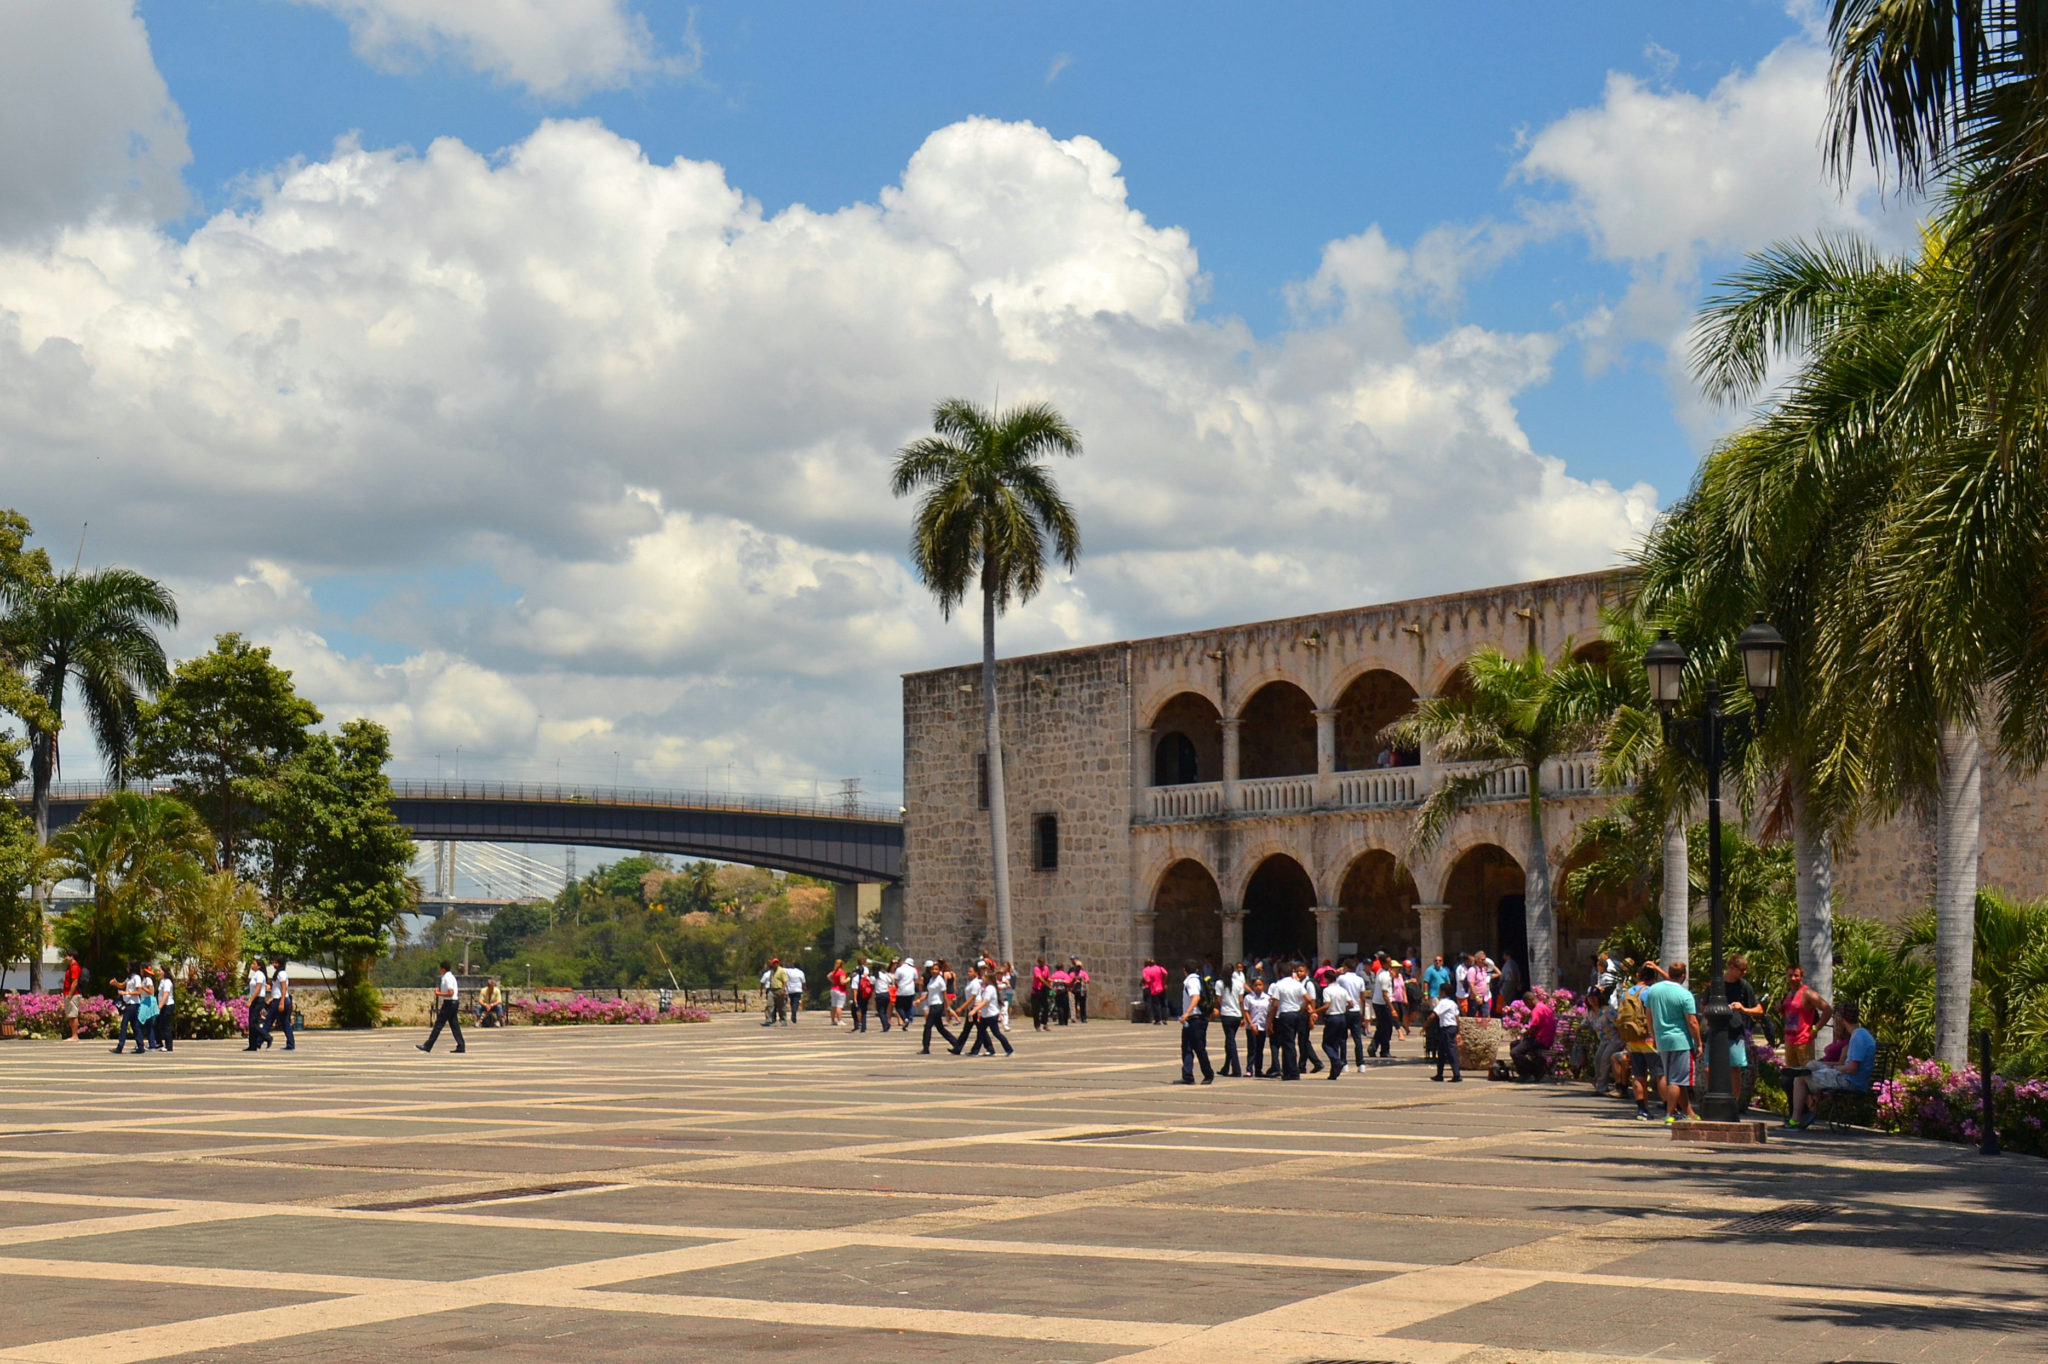 Columbus's Castle (Alcazar de Colon) in Santo Domingo